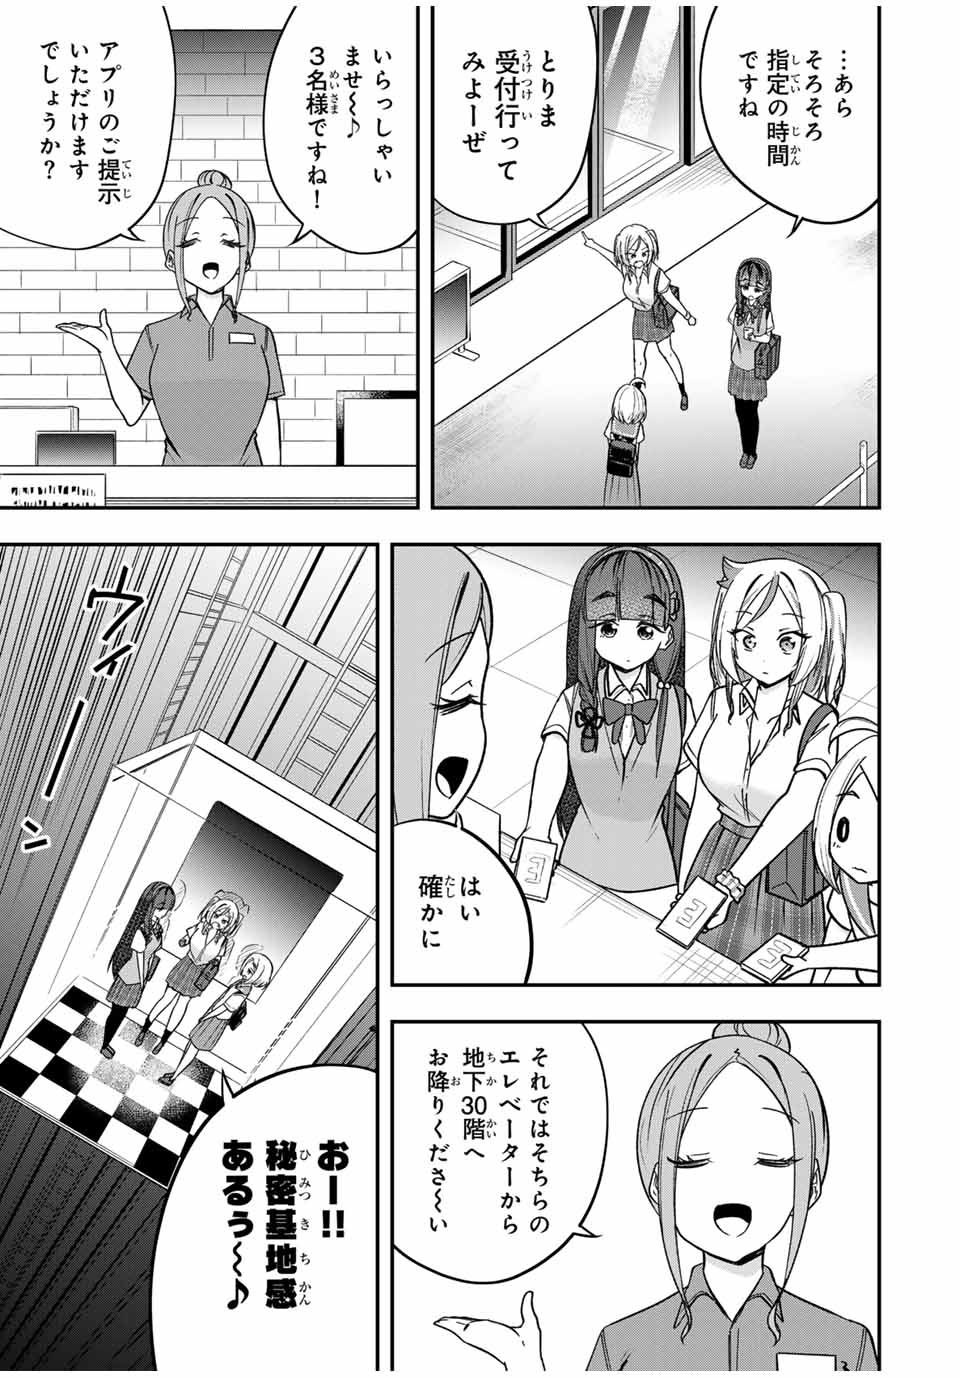 Heroine wa xx Okasegitai - Chapter 11 - Page 17